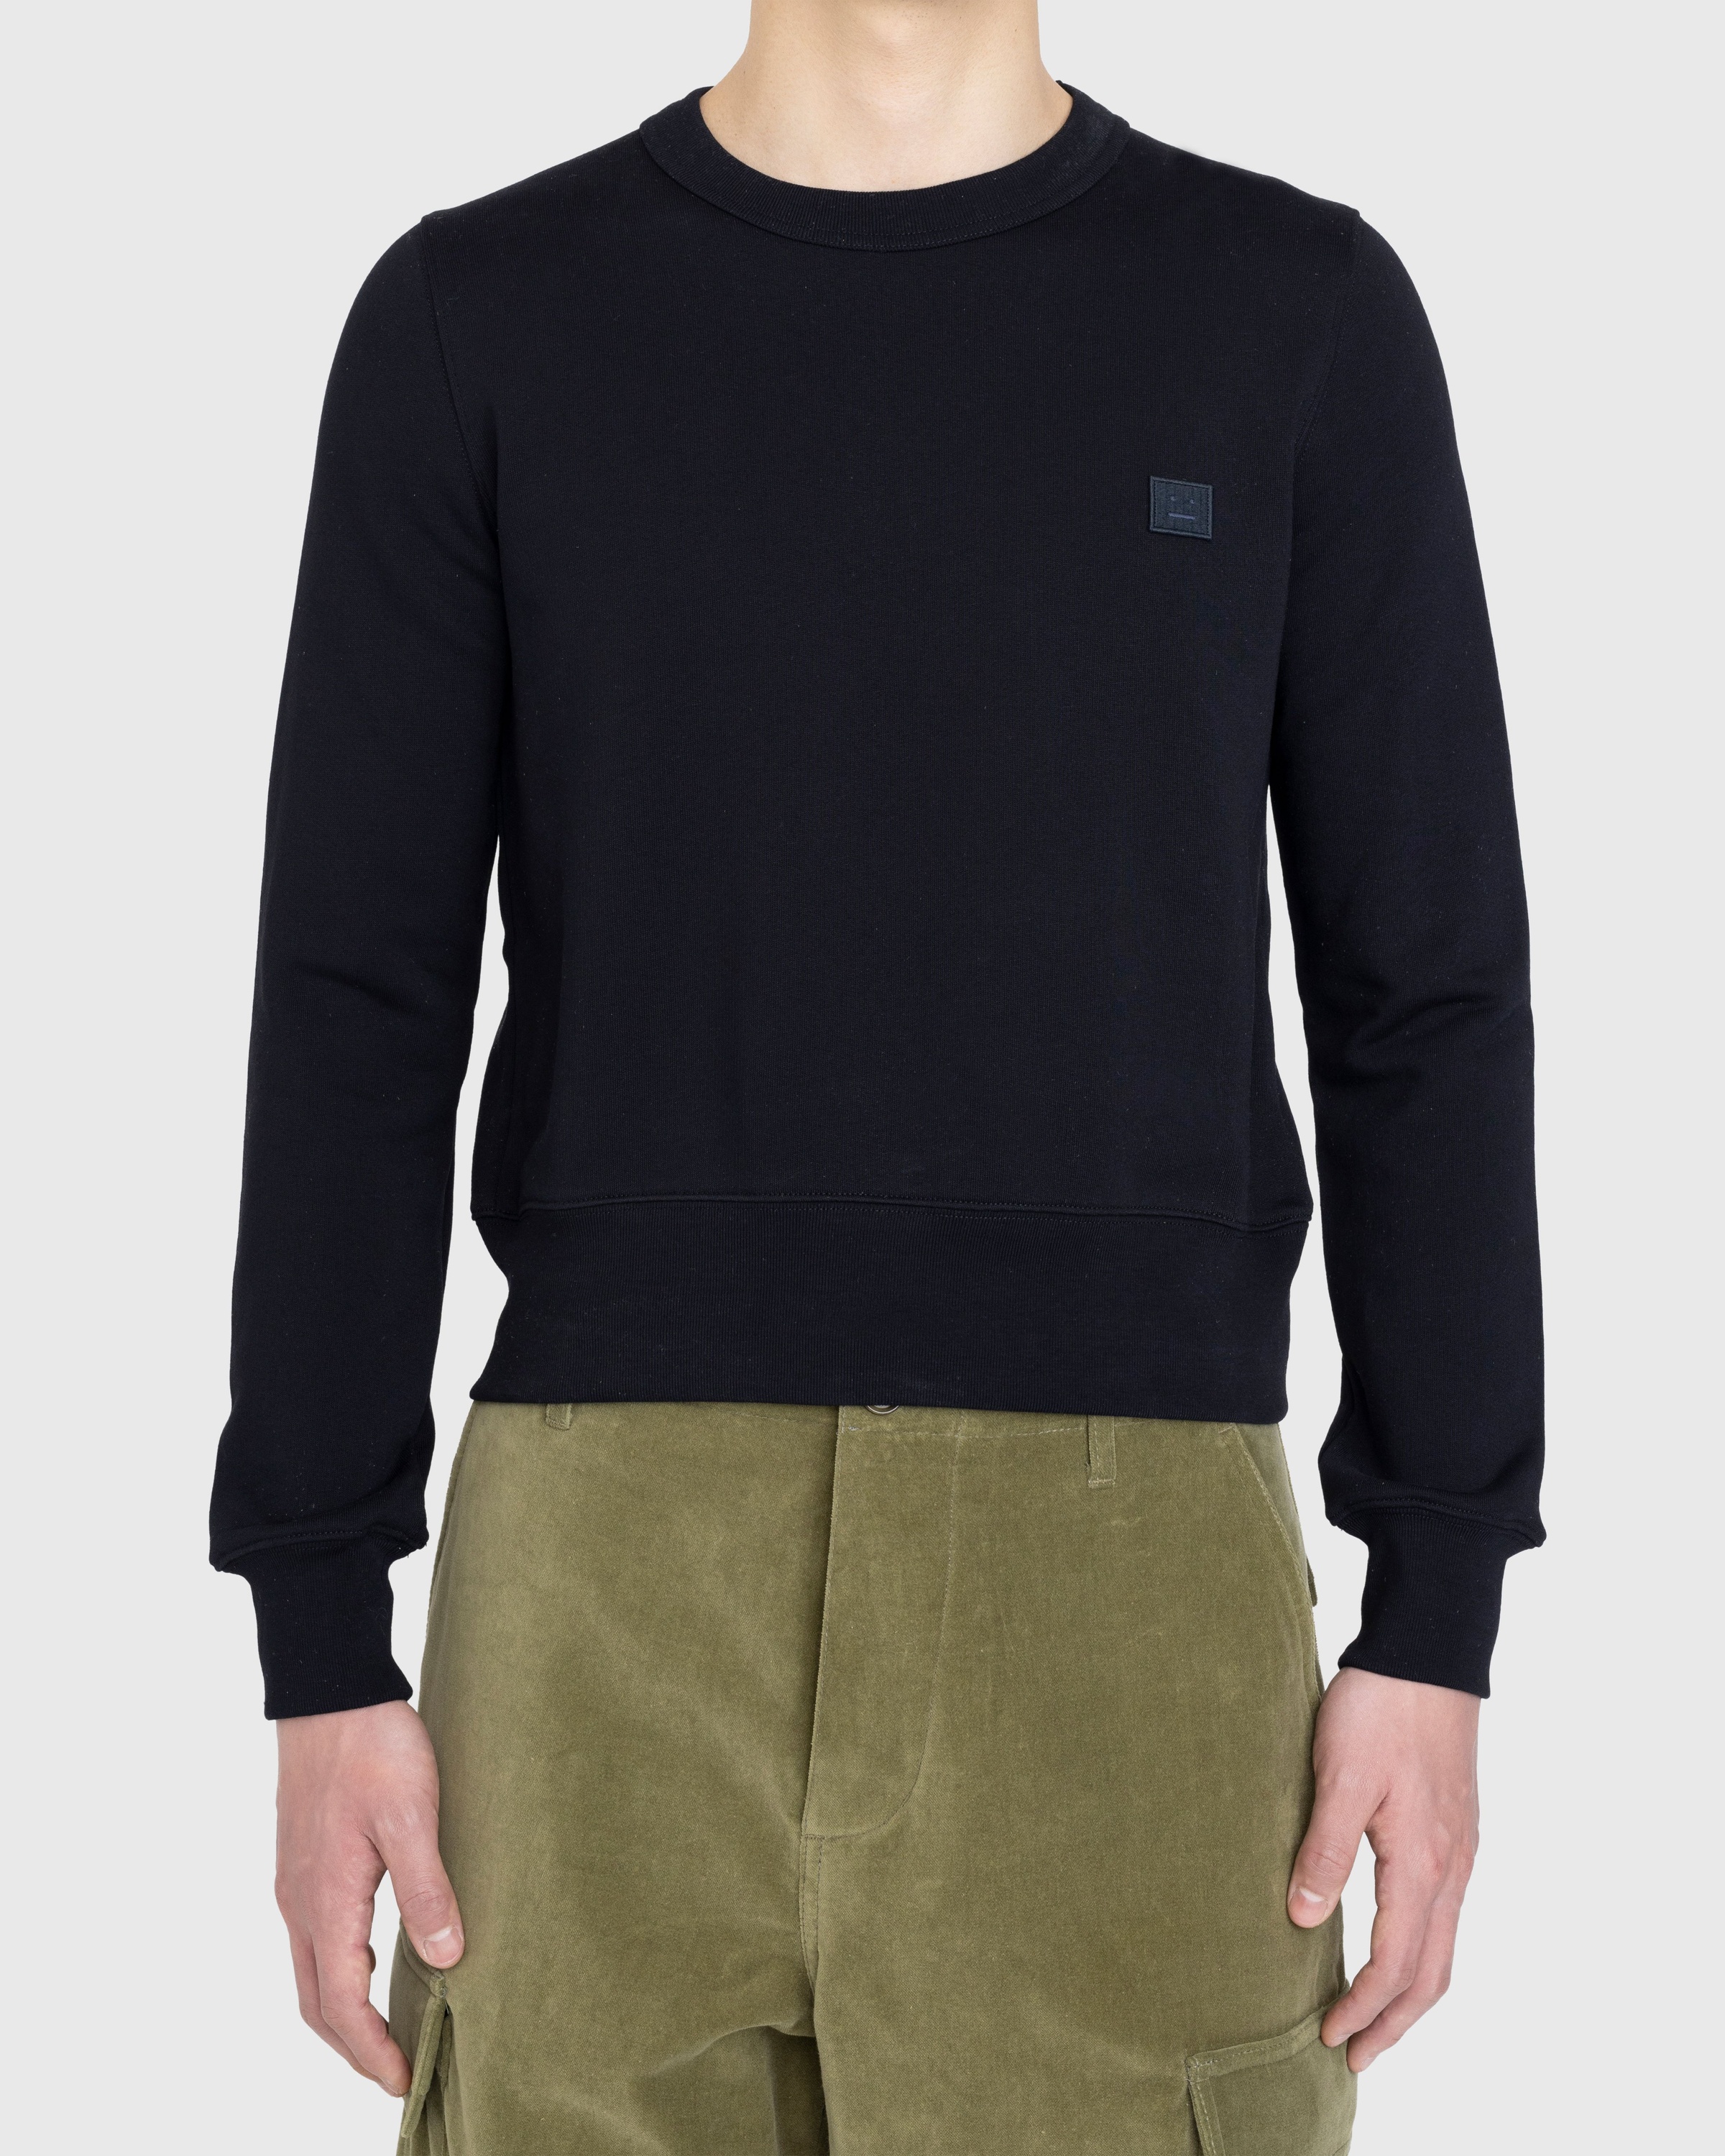 Acne Studios – Organic Cotton Crewneck Sweatshirt Black - Sweats - Black - Image 2